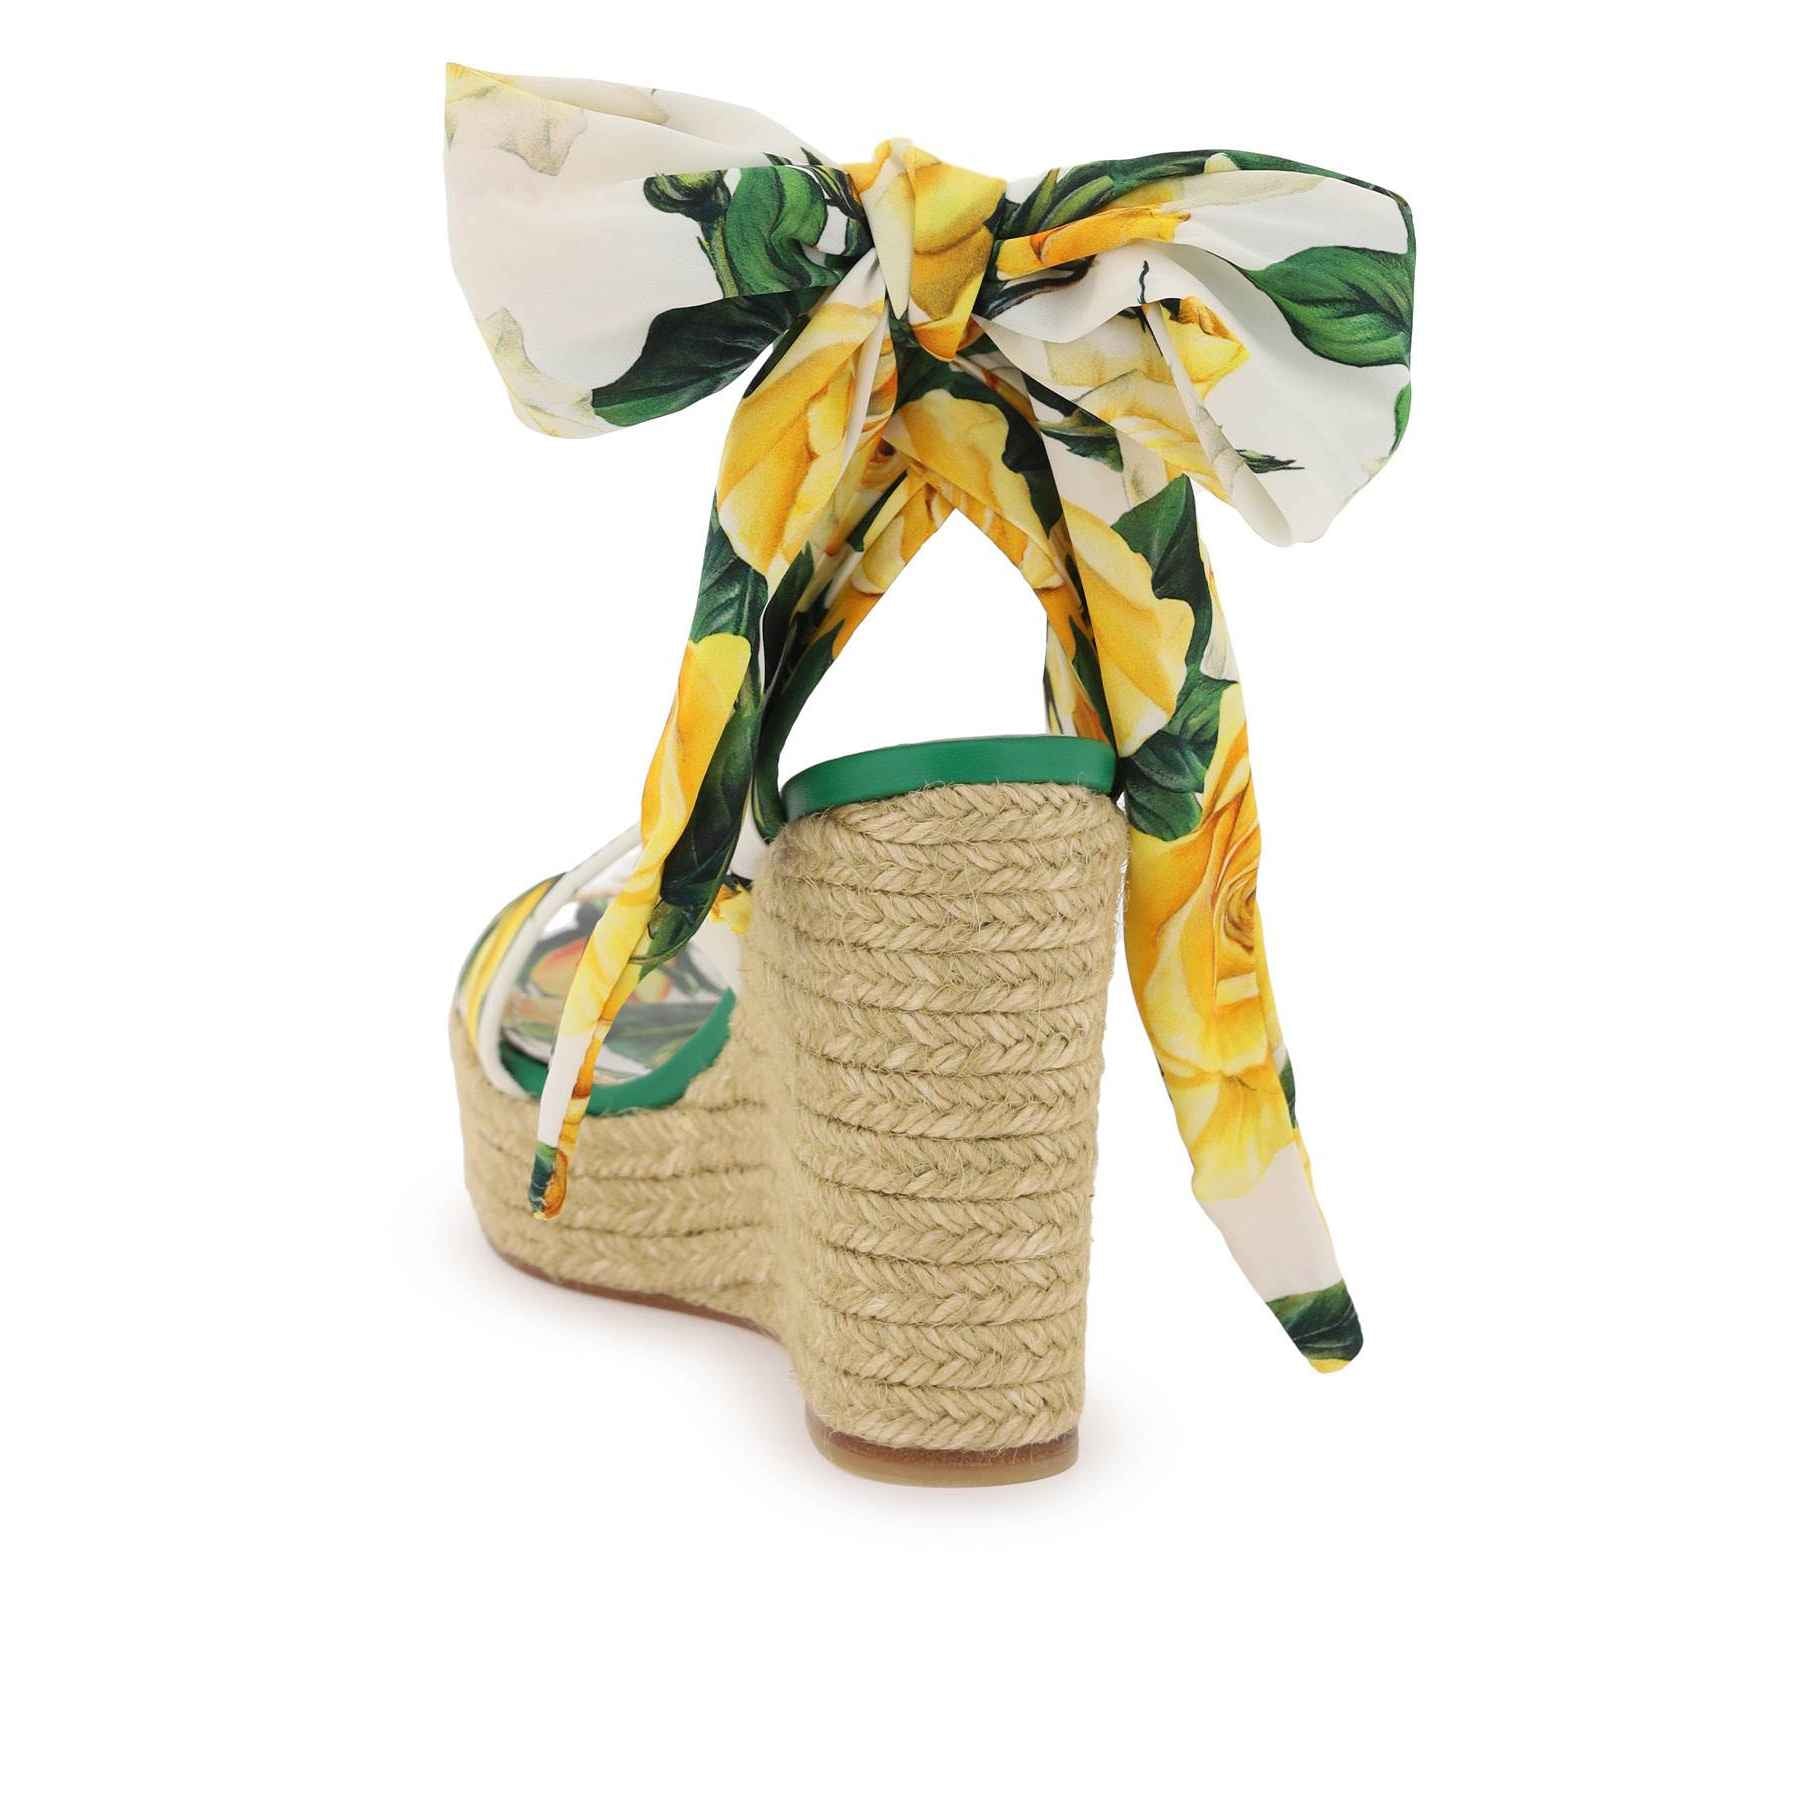 Dolce &amp; Gabbana Floral Espadrilles Wedge Sandals